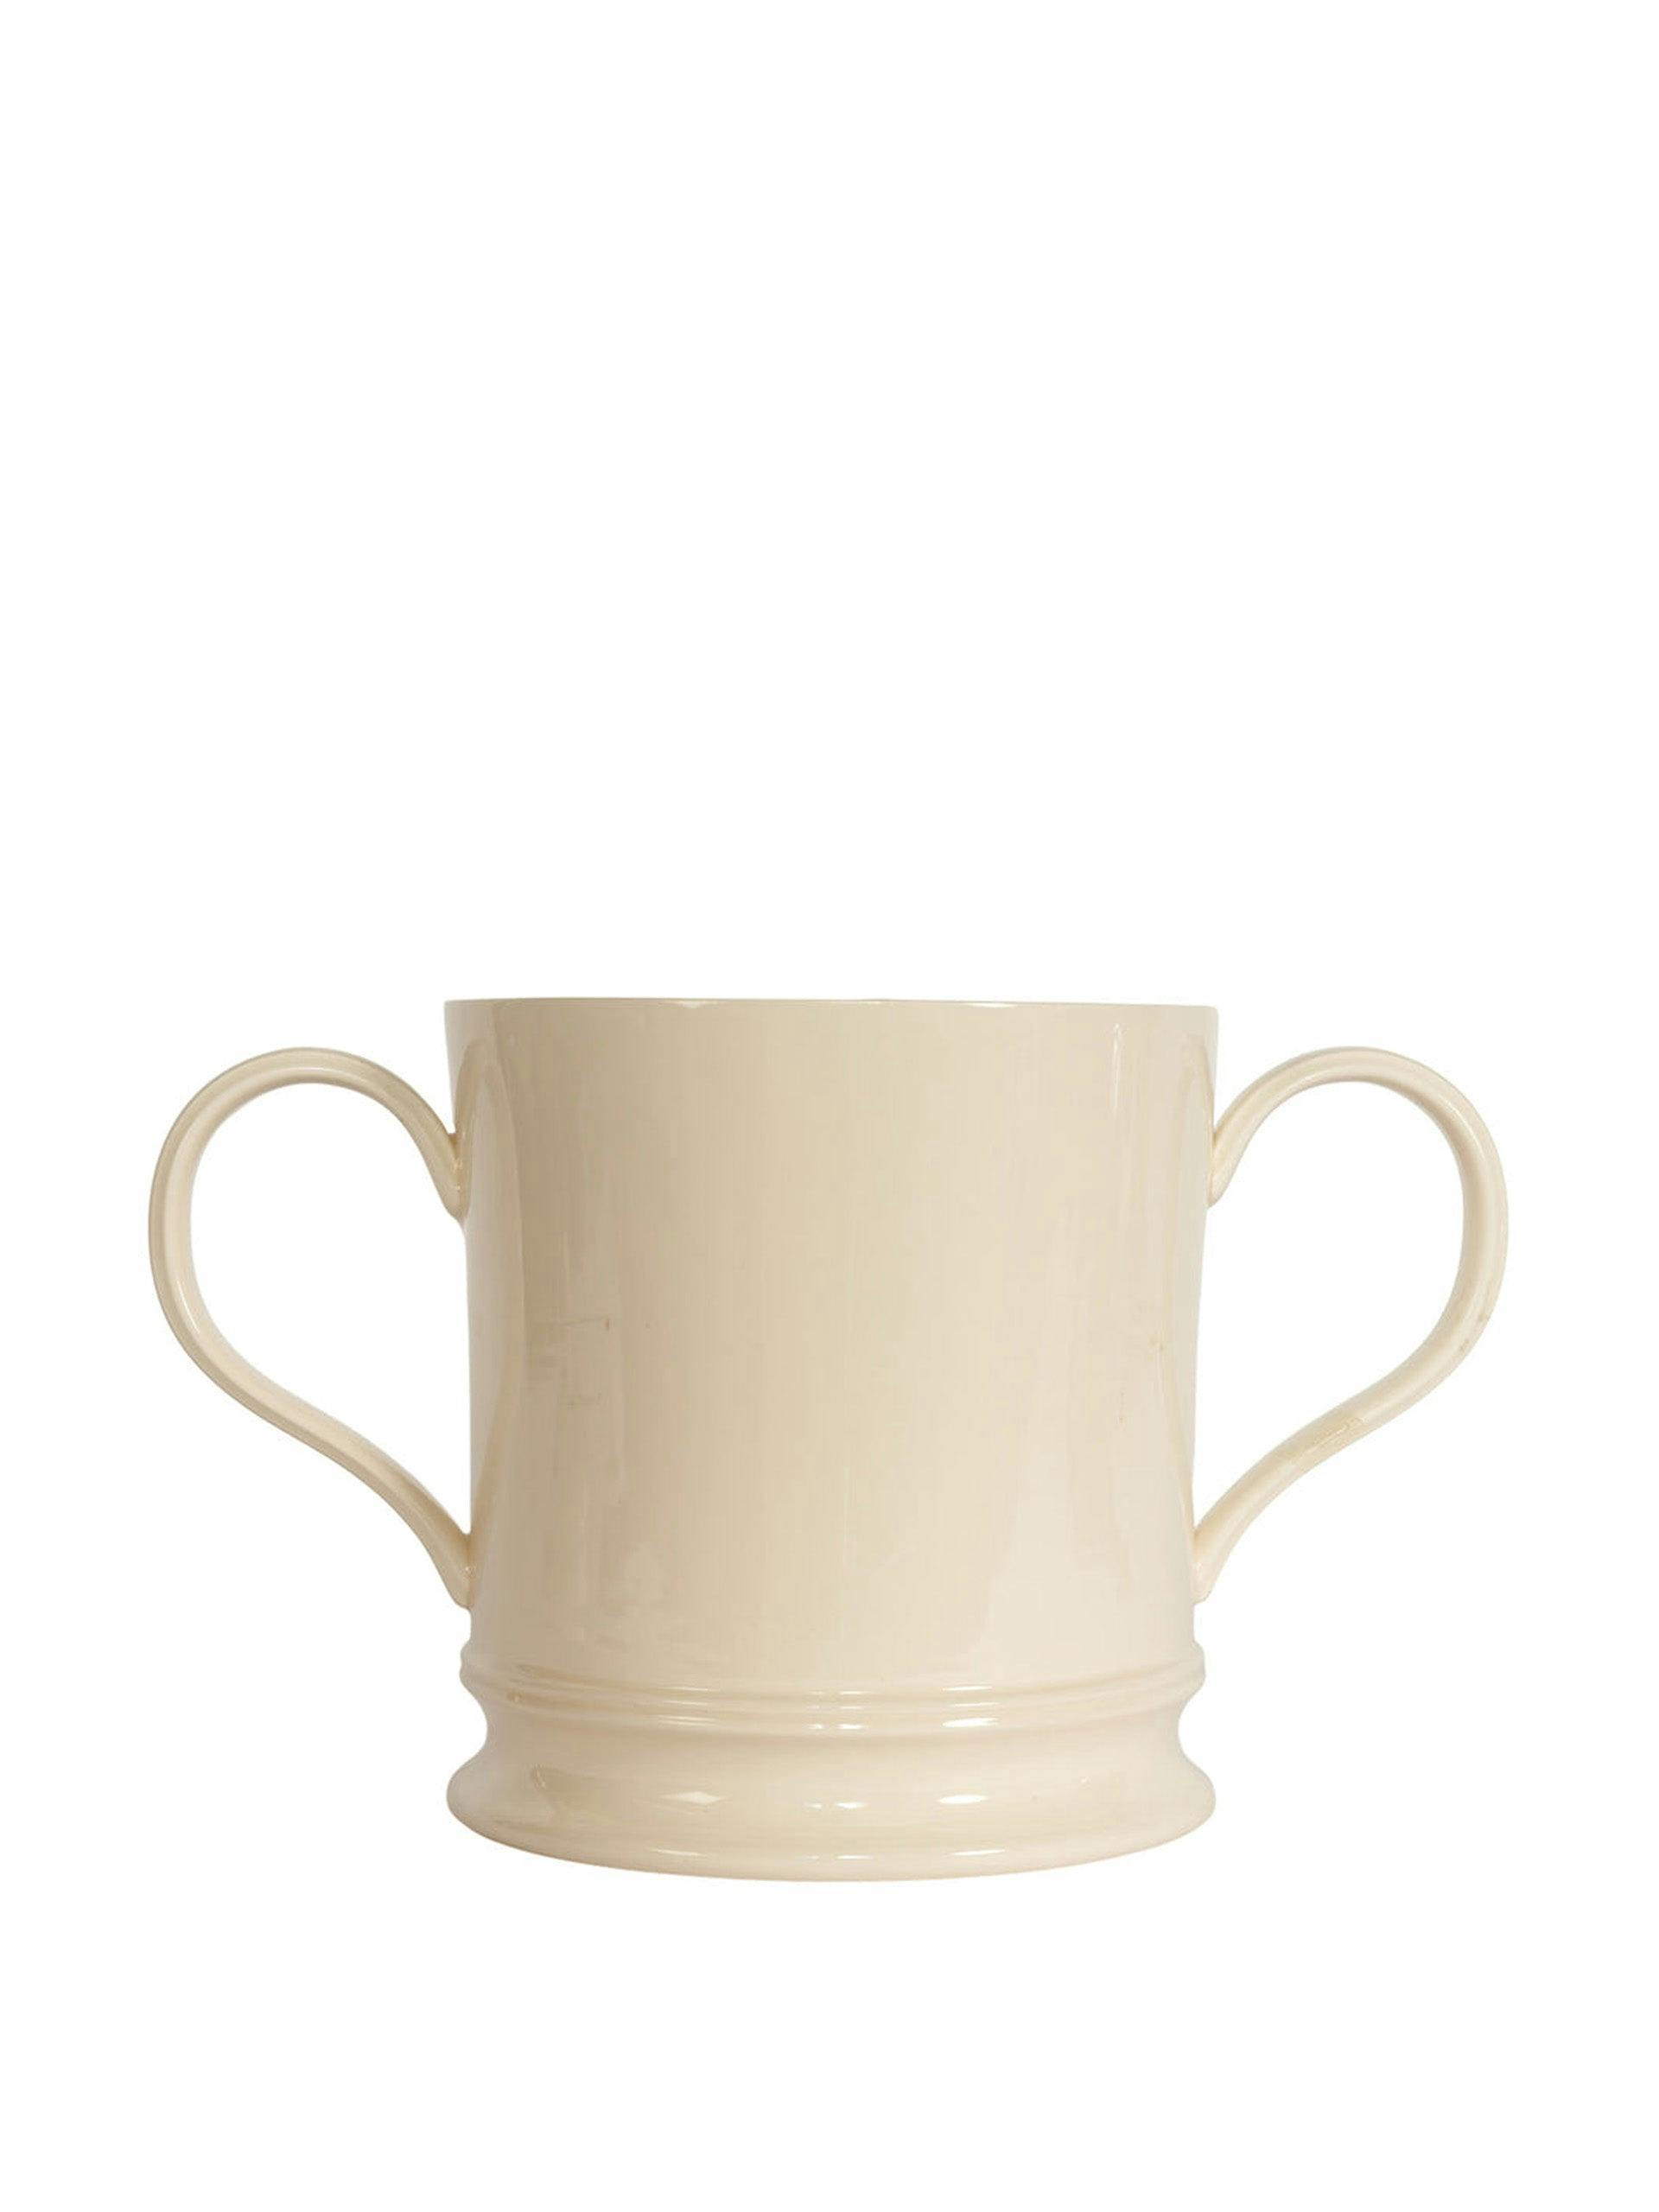 P&H Creamware loving cup